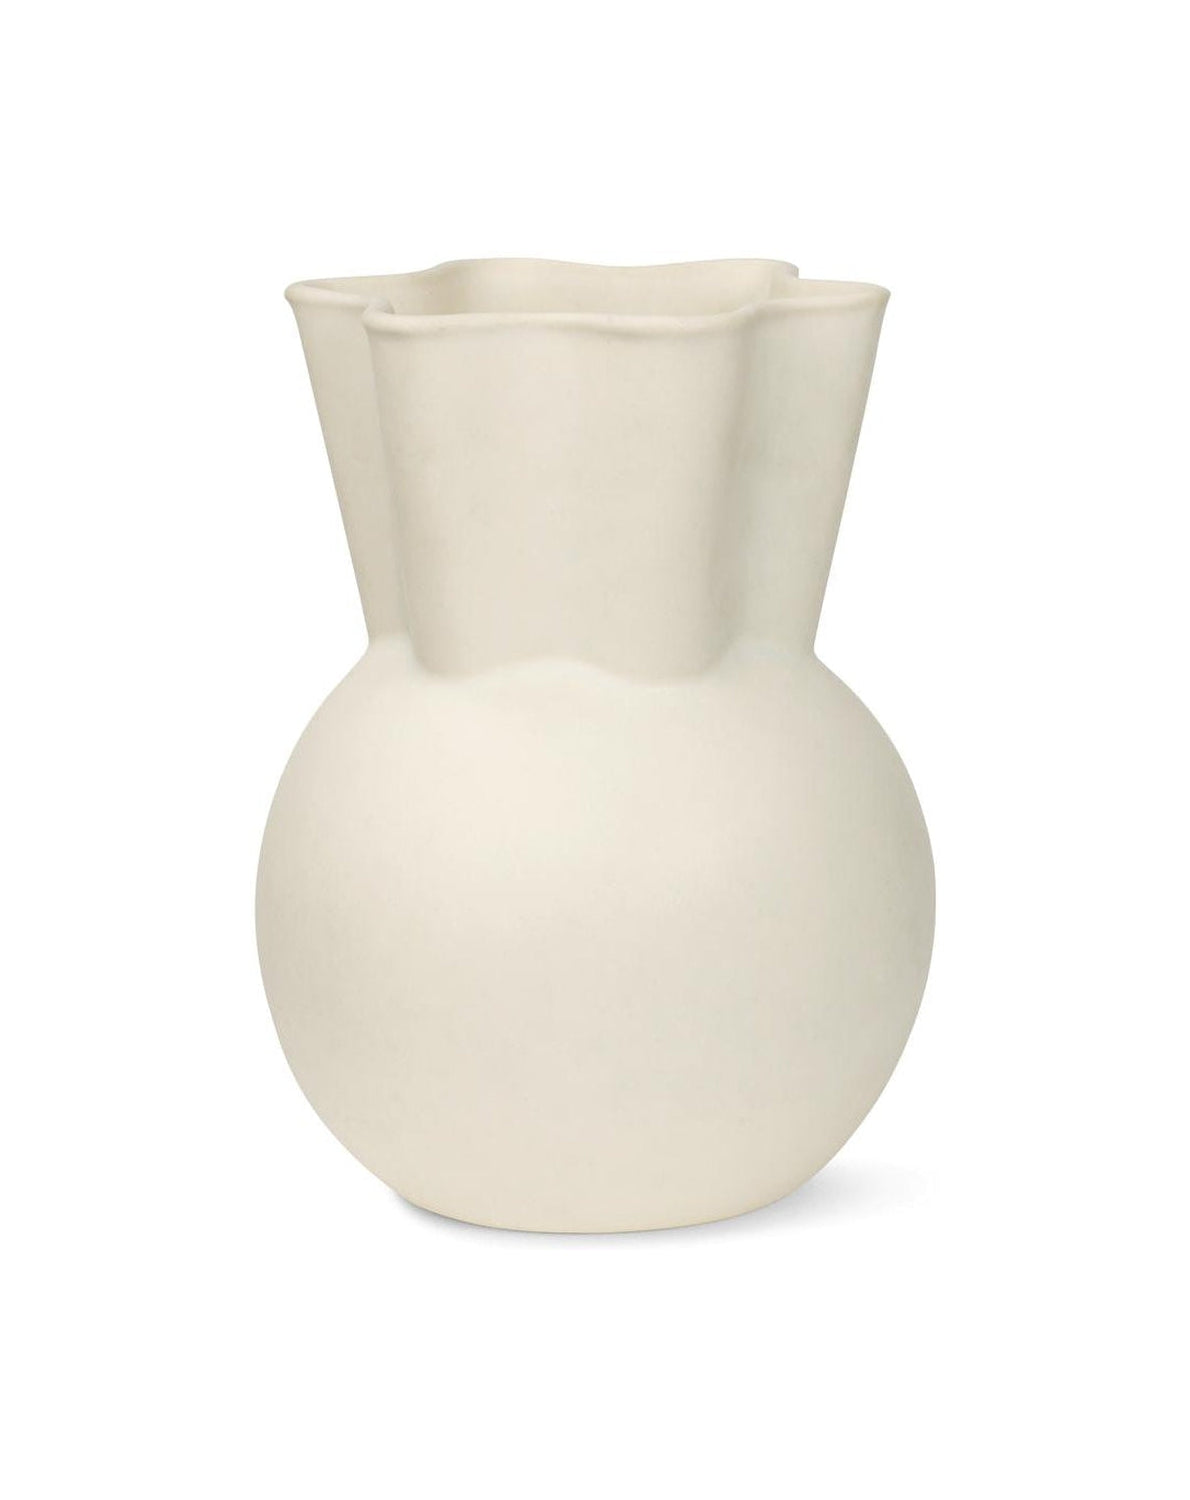 Federkopenhagen -Vase mit gekrümmtem Oberteil, 50 cm